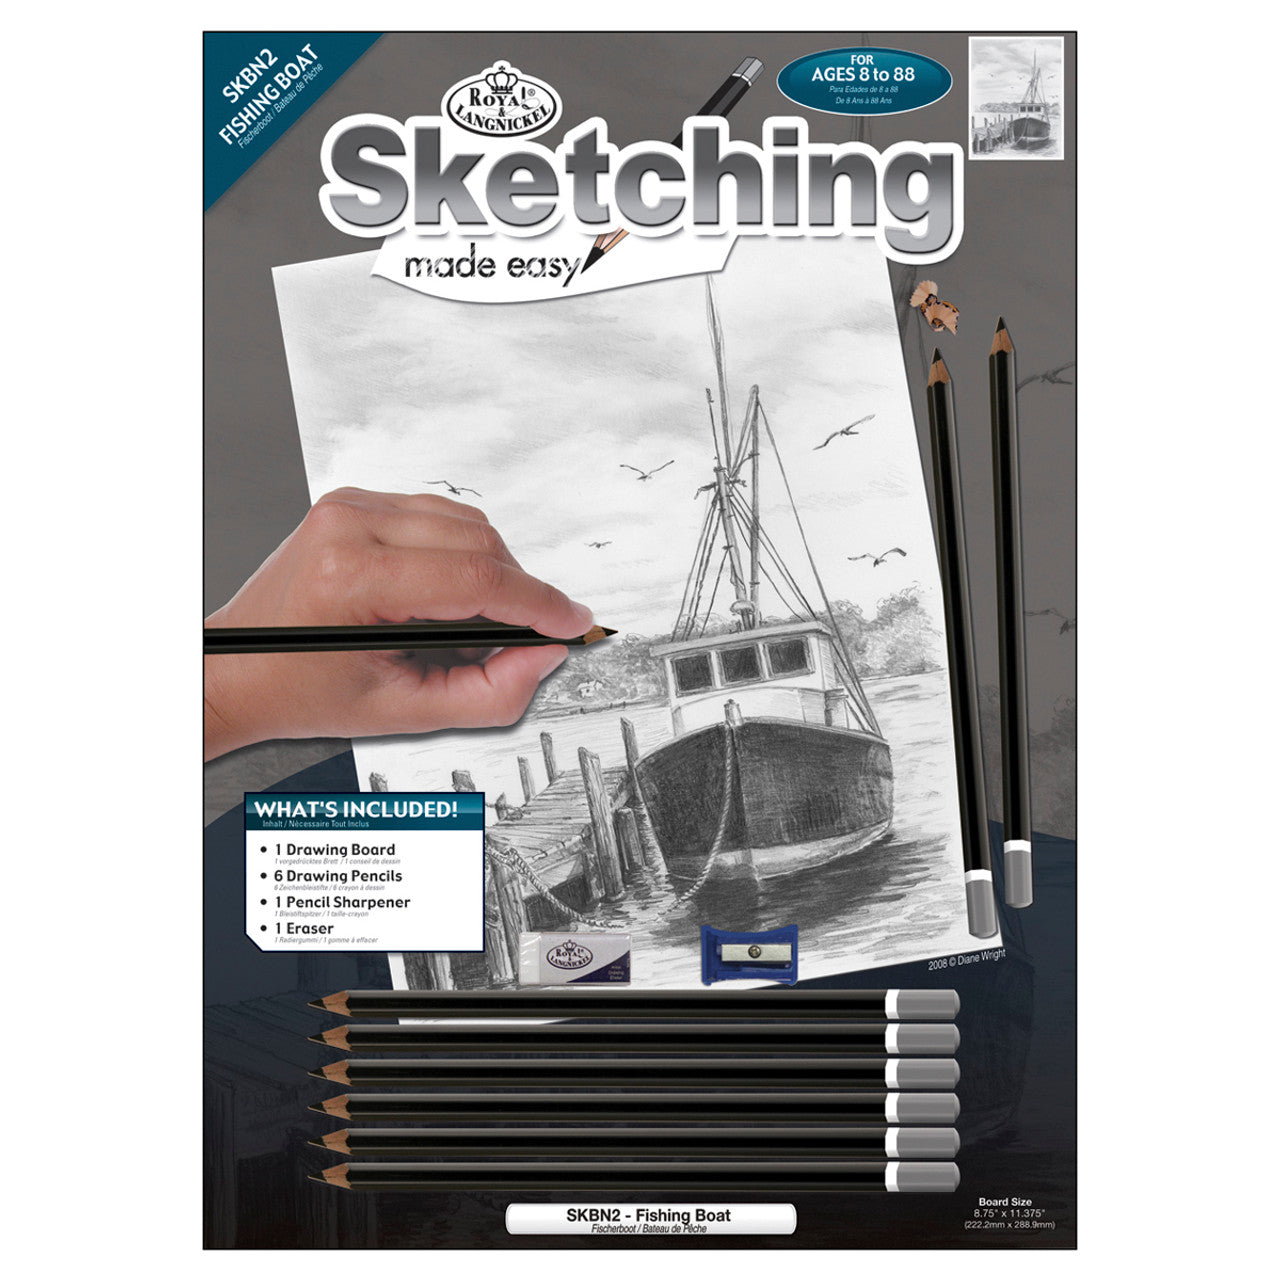 Royal & Langnickel Sketching Made Easy Kit 9x12"